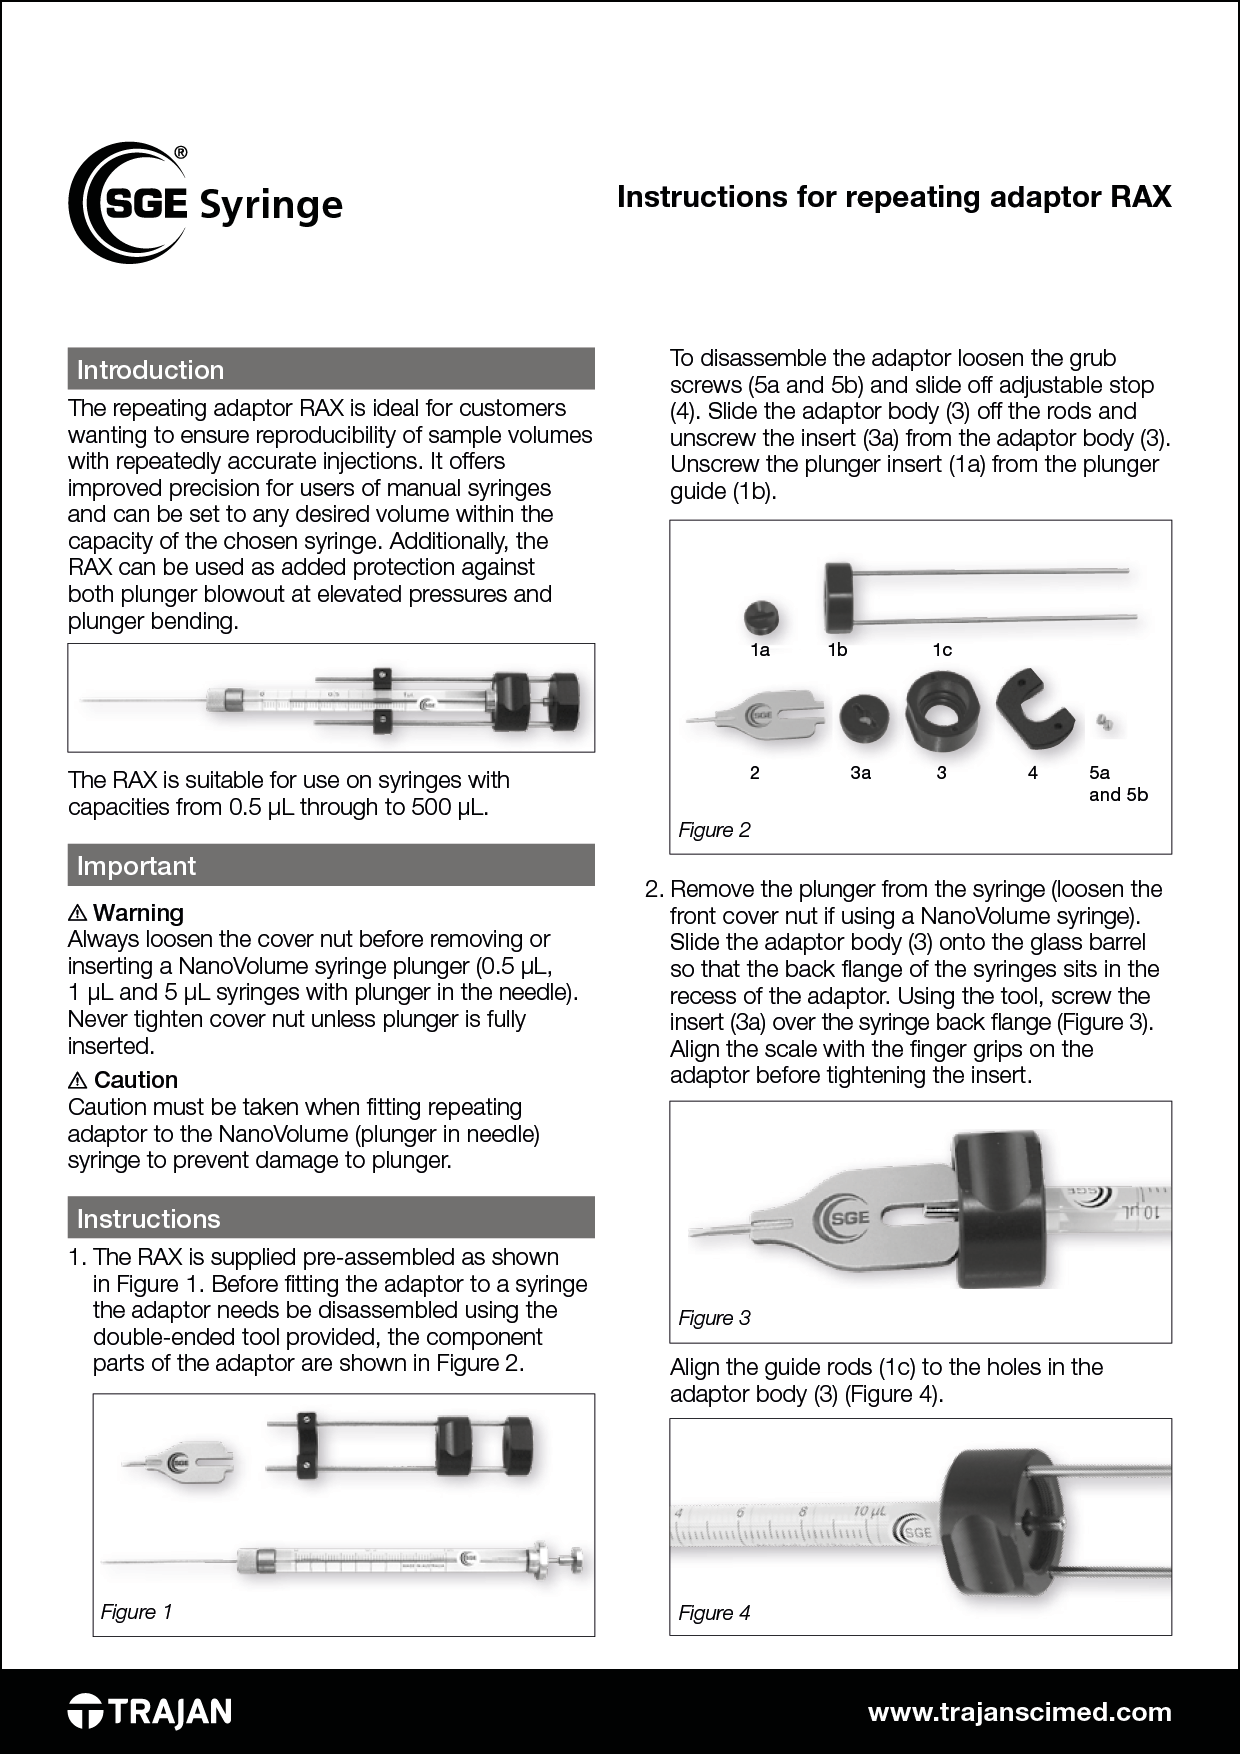 Manual - Instructions for repeating adaptor RAX